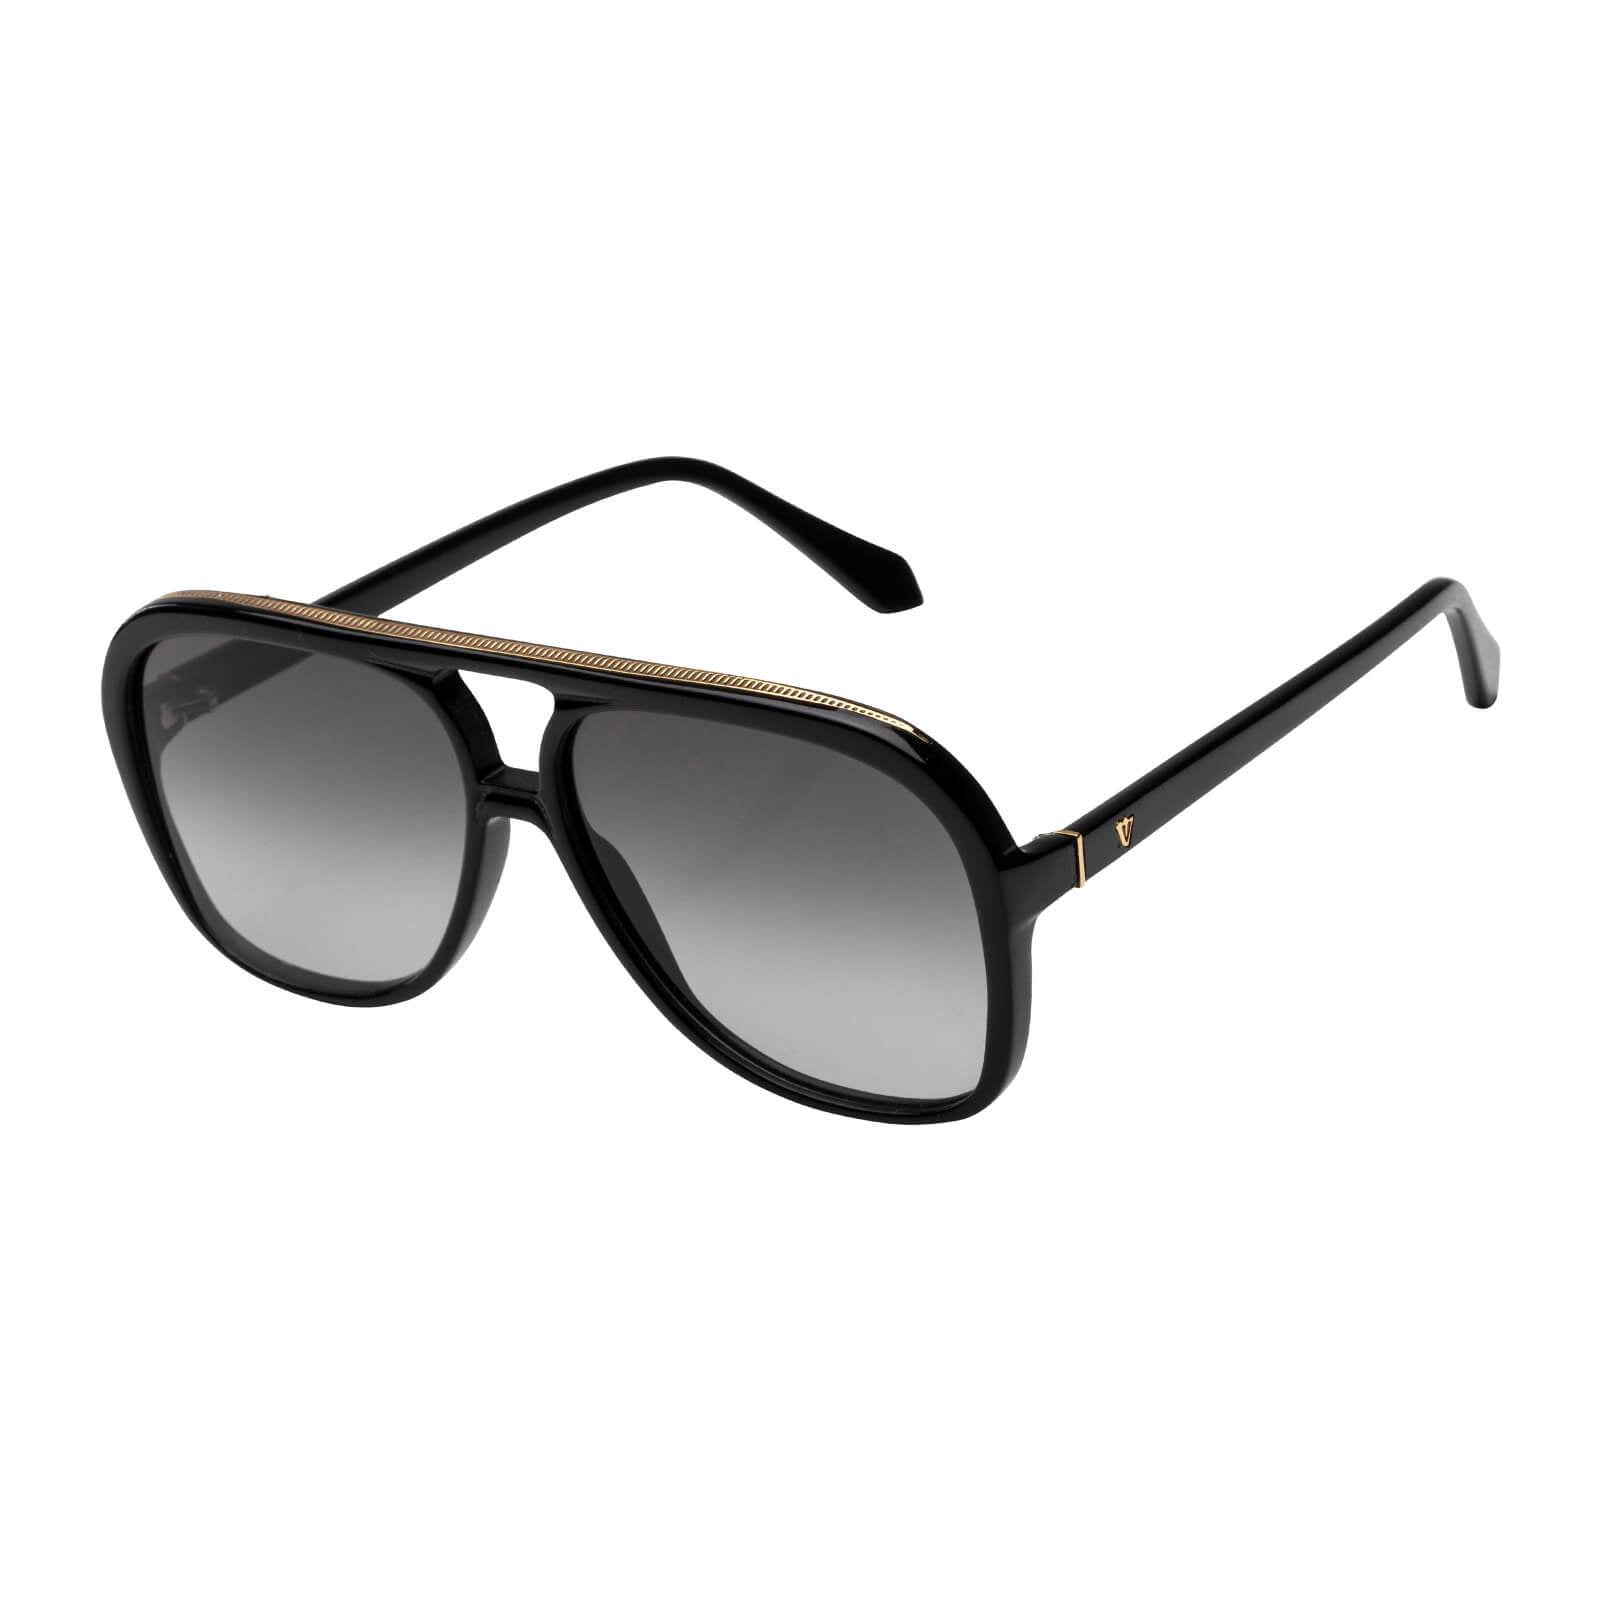 Bang | Sunglasses - Gloss Black w. Gold Metal Trim / Black Gradient Lens